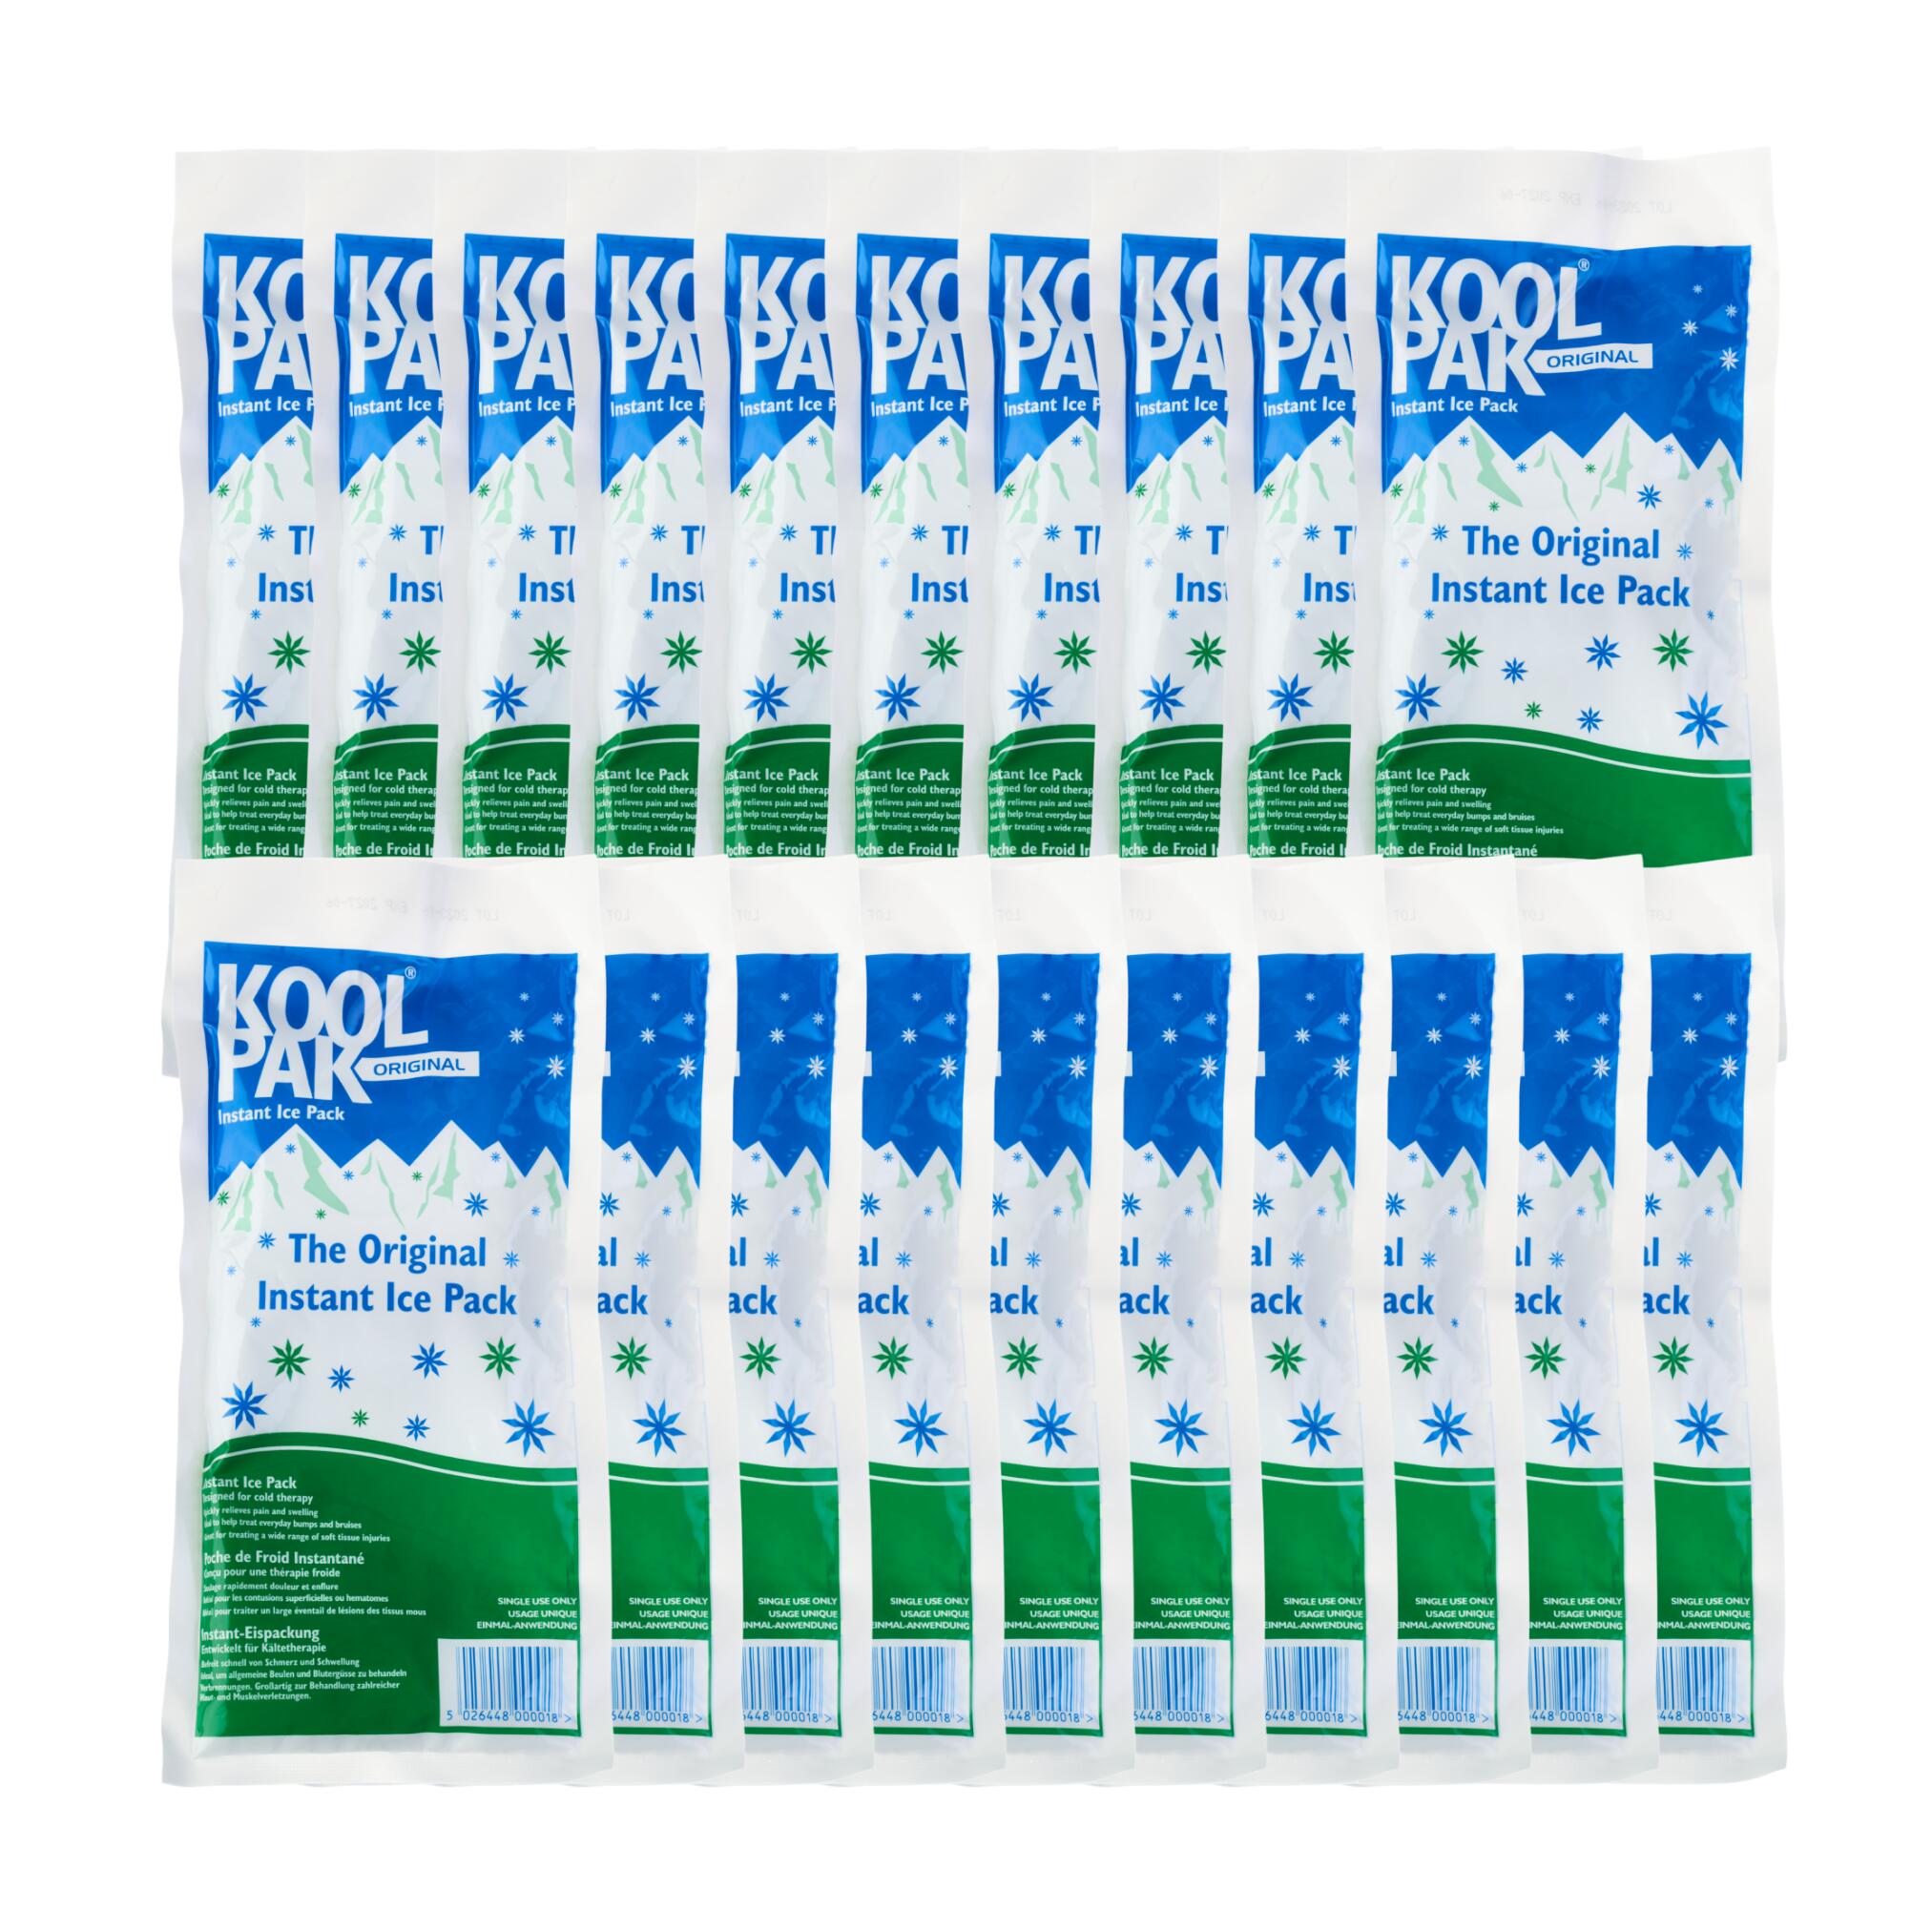 KOOLPAK Koolpak Original Instant Ice Pack - 12 x 29cm - Pack of 20